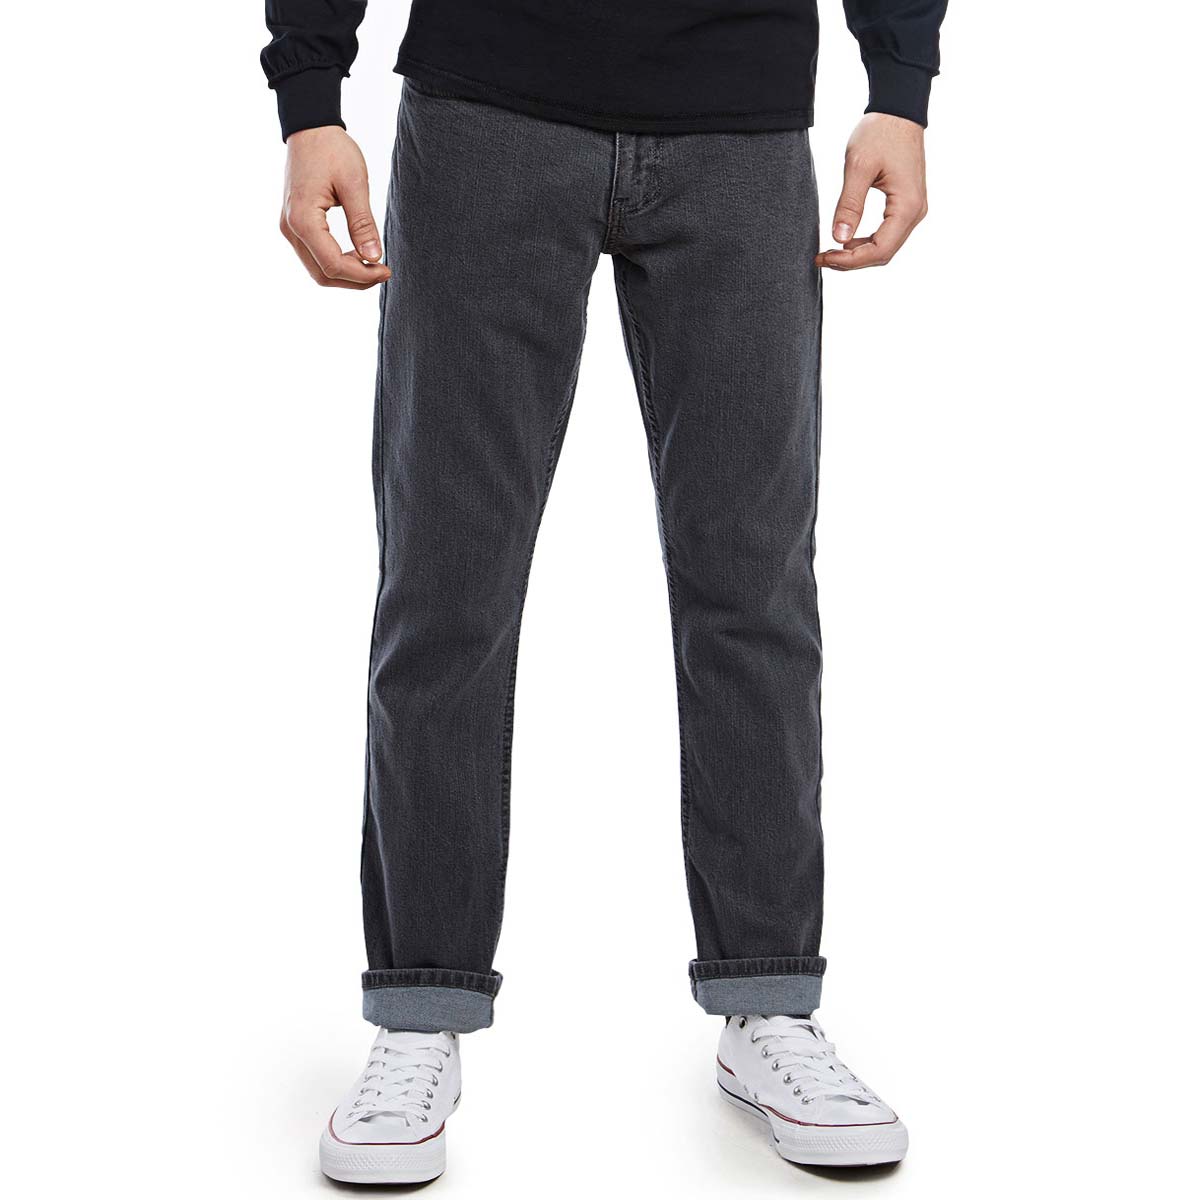 CCS Slim Fit Jeans - Grey